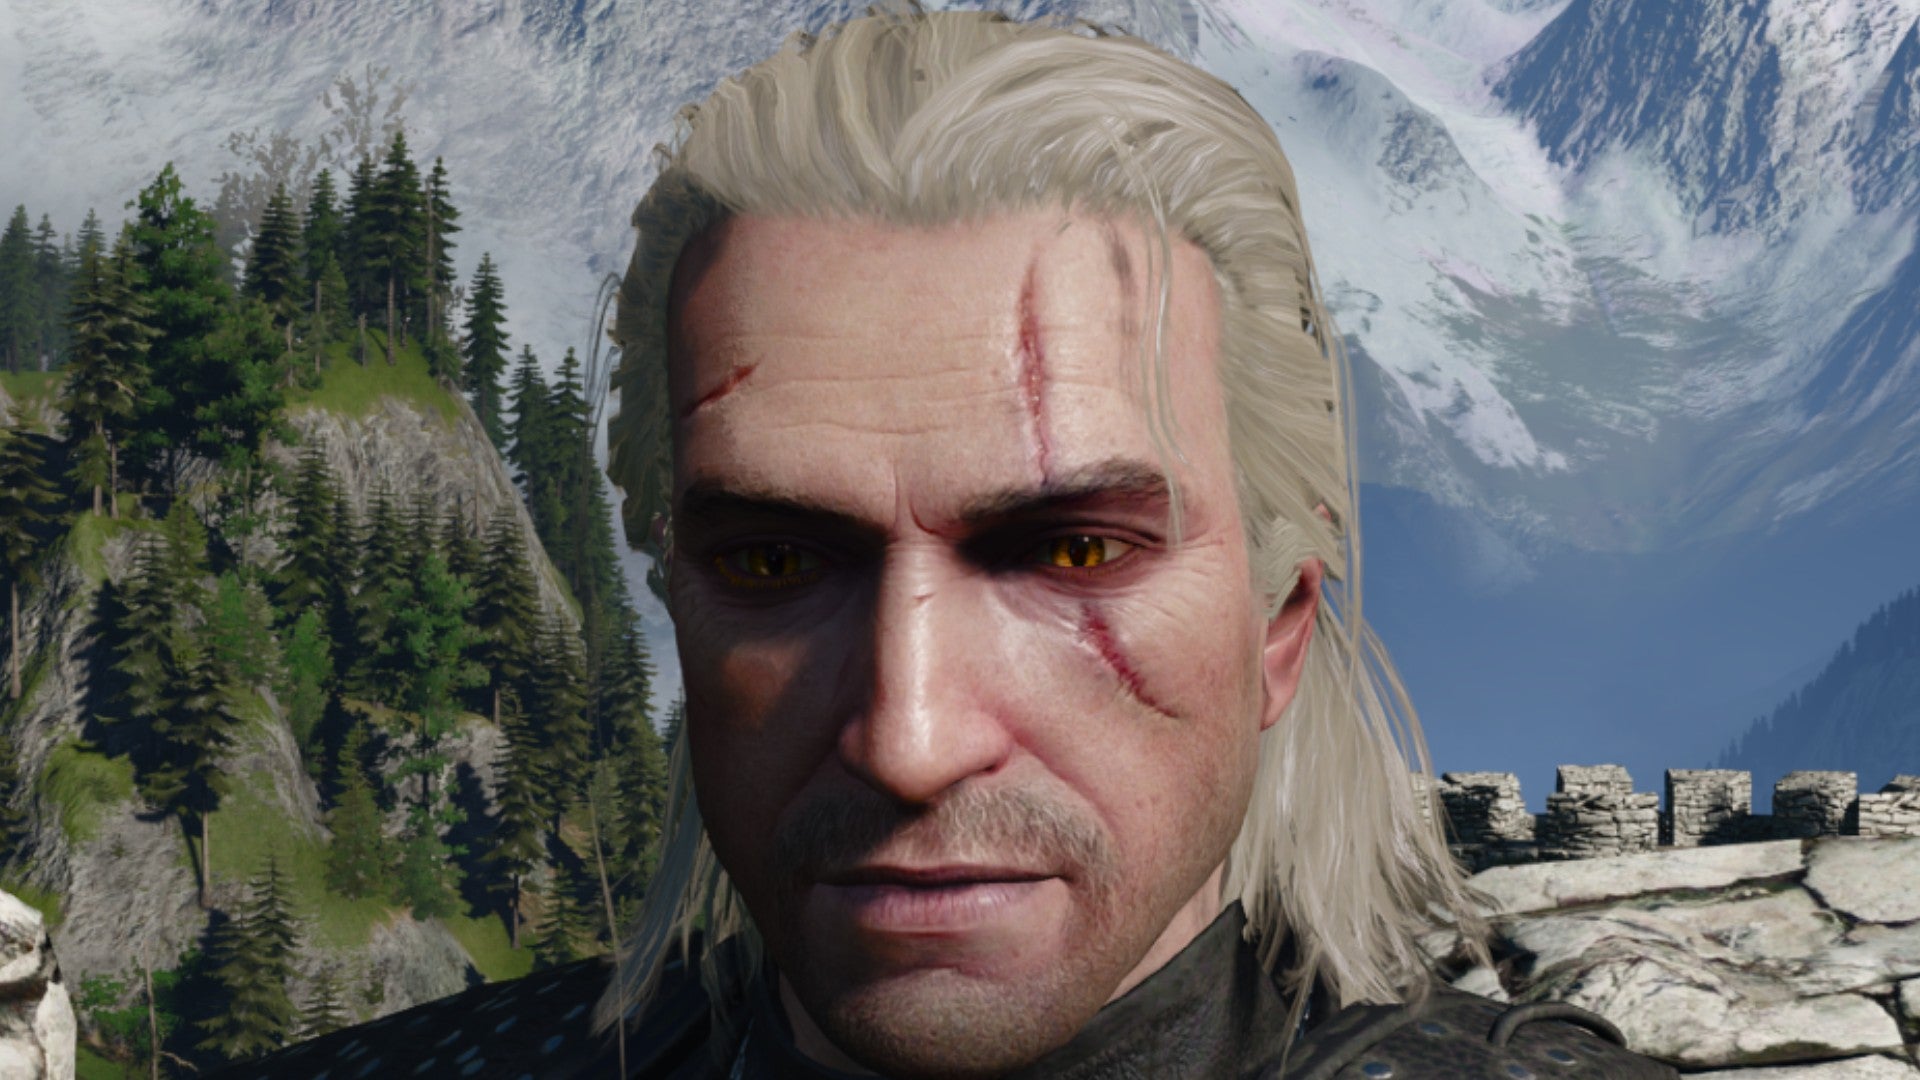 Imagen de Witcher 3 que muestra a Geralt con rastrojo.